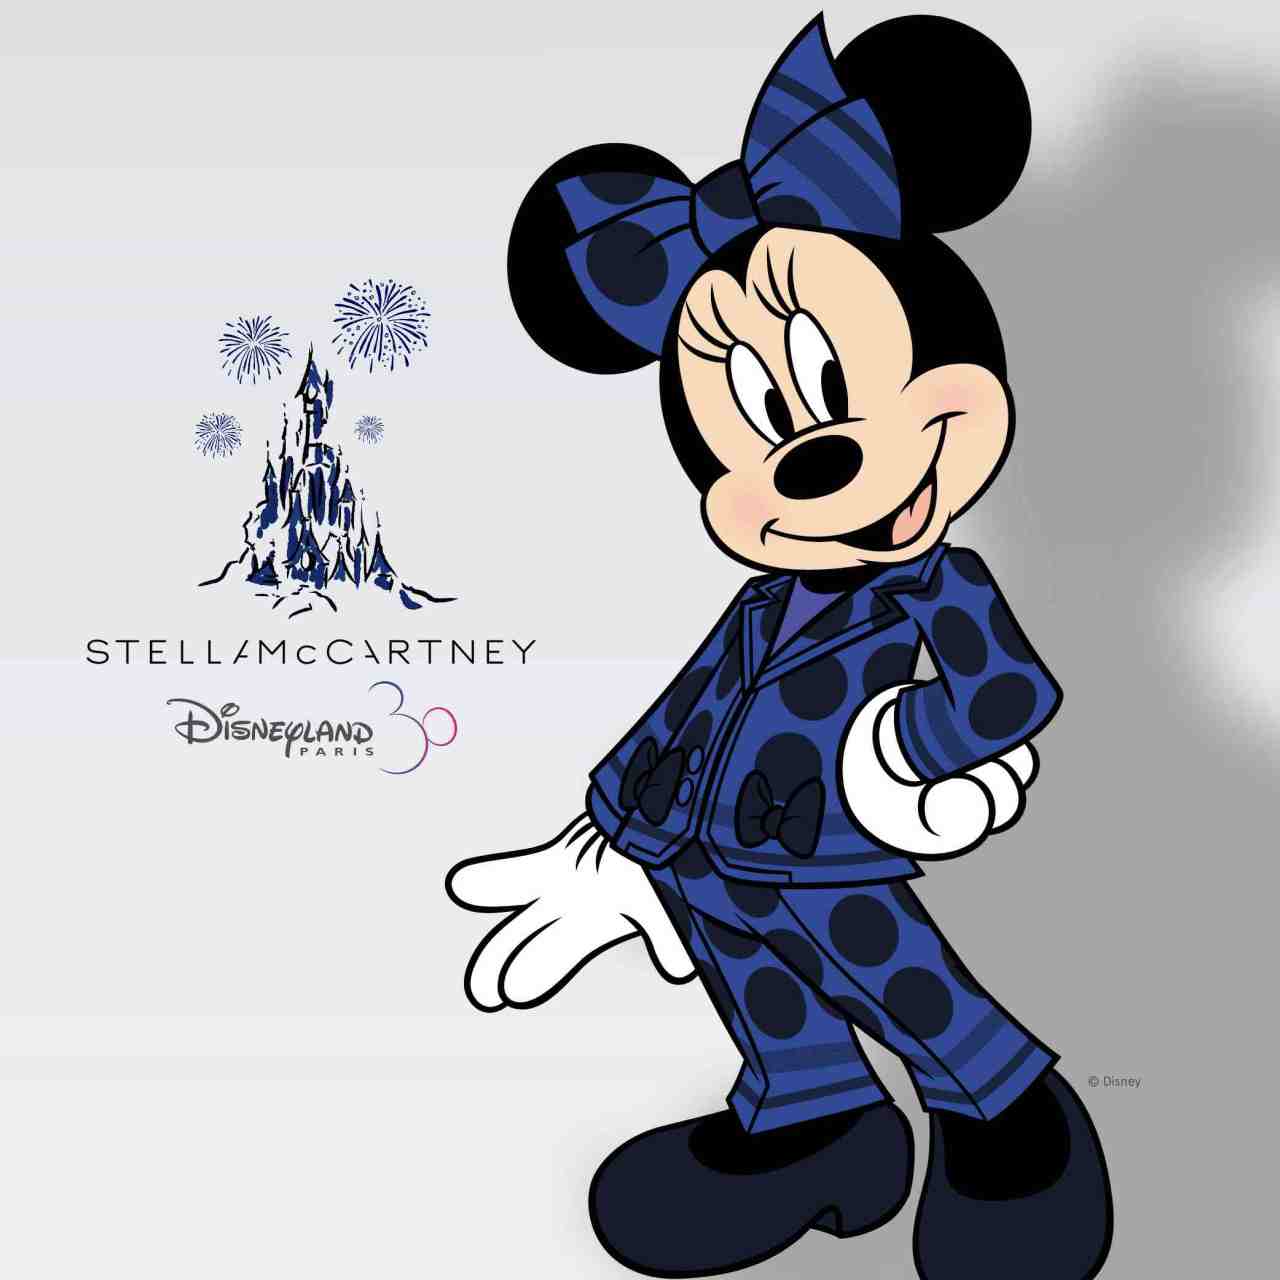 Startling Stella McCartney revamp for Minnie Mouse at Disneyland Paris